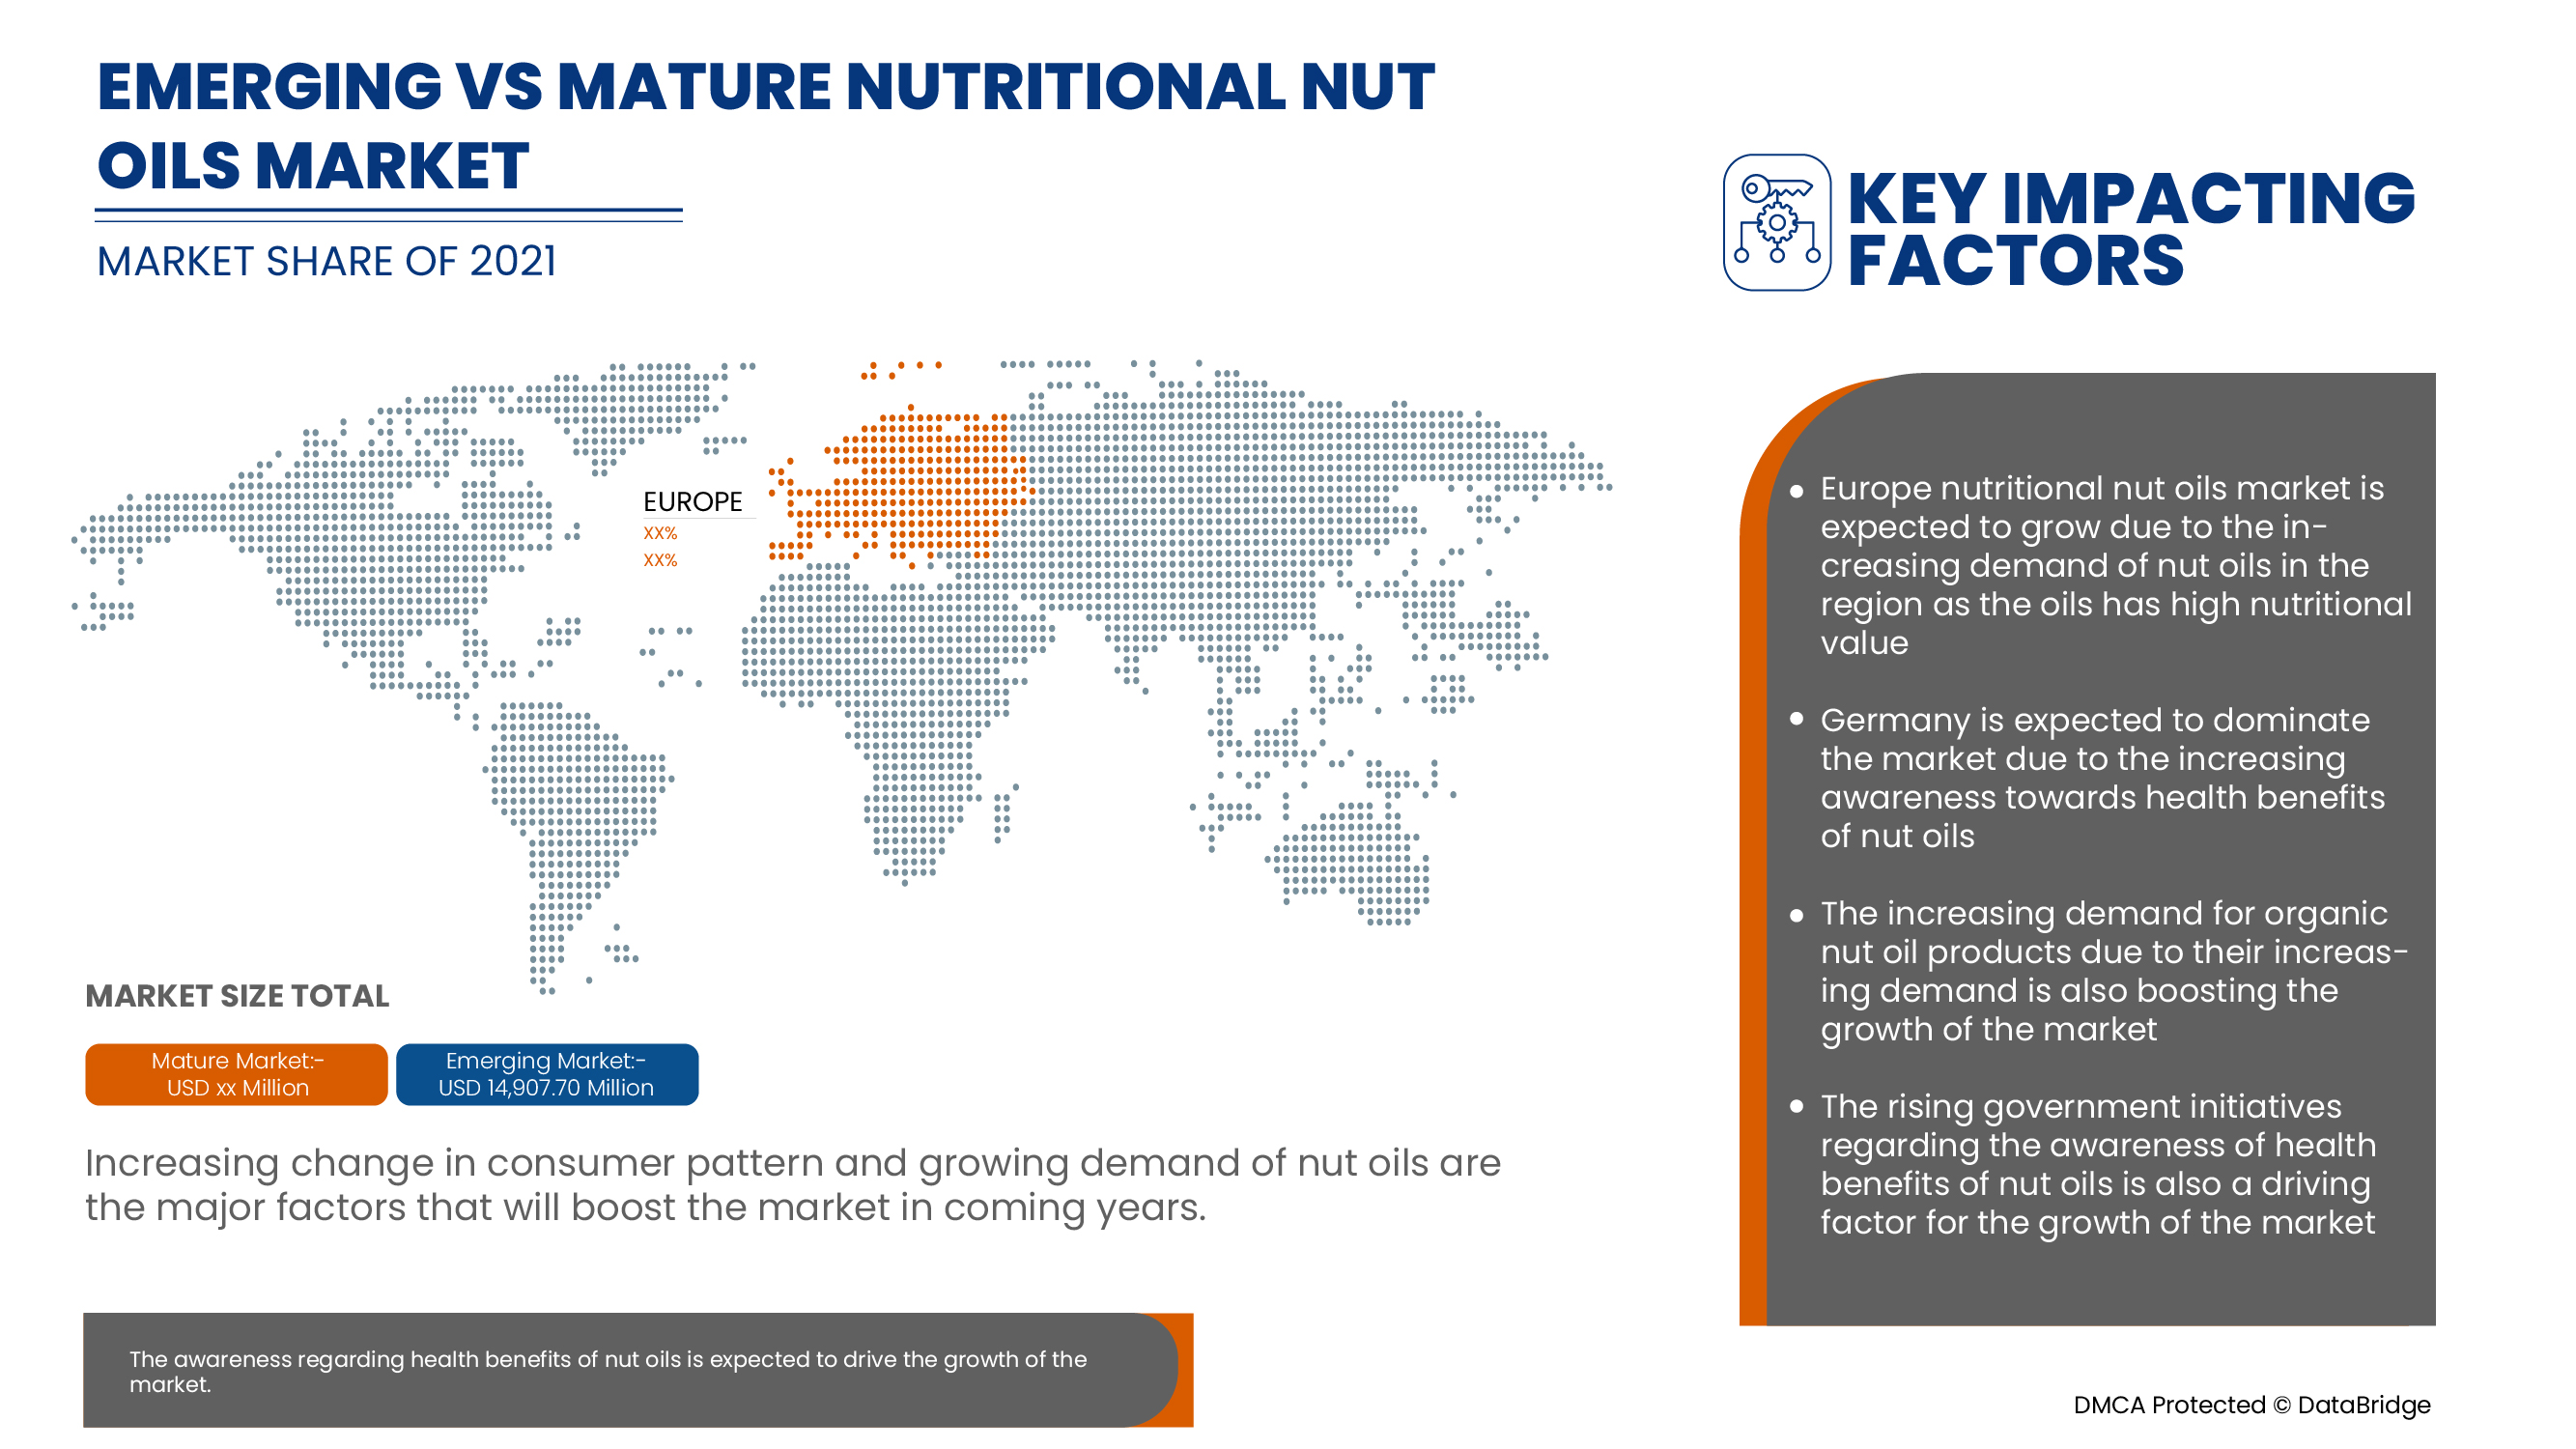 Europe Nutritional Nut Oils Market